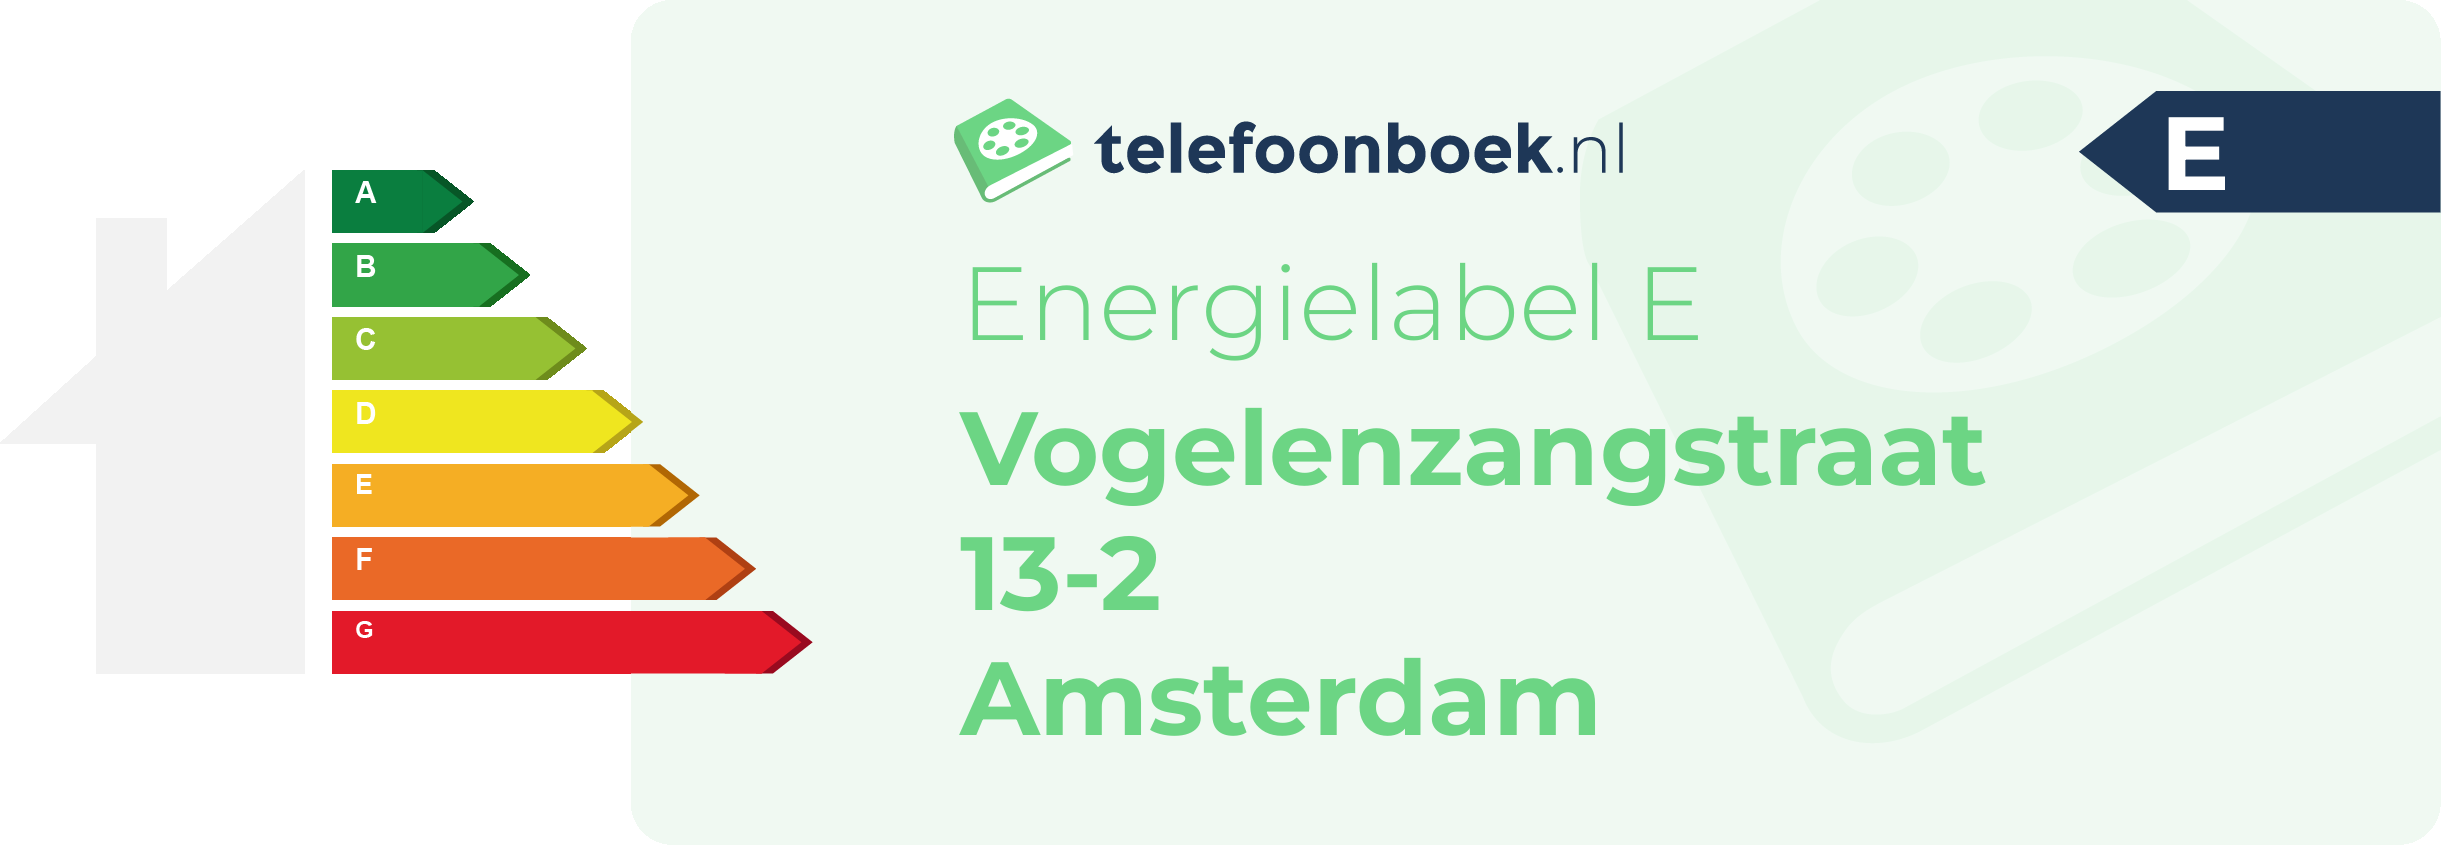 Energielabel Vogelenzangstraat 13-2 Amsterdam